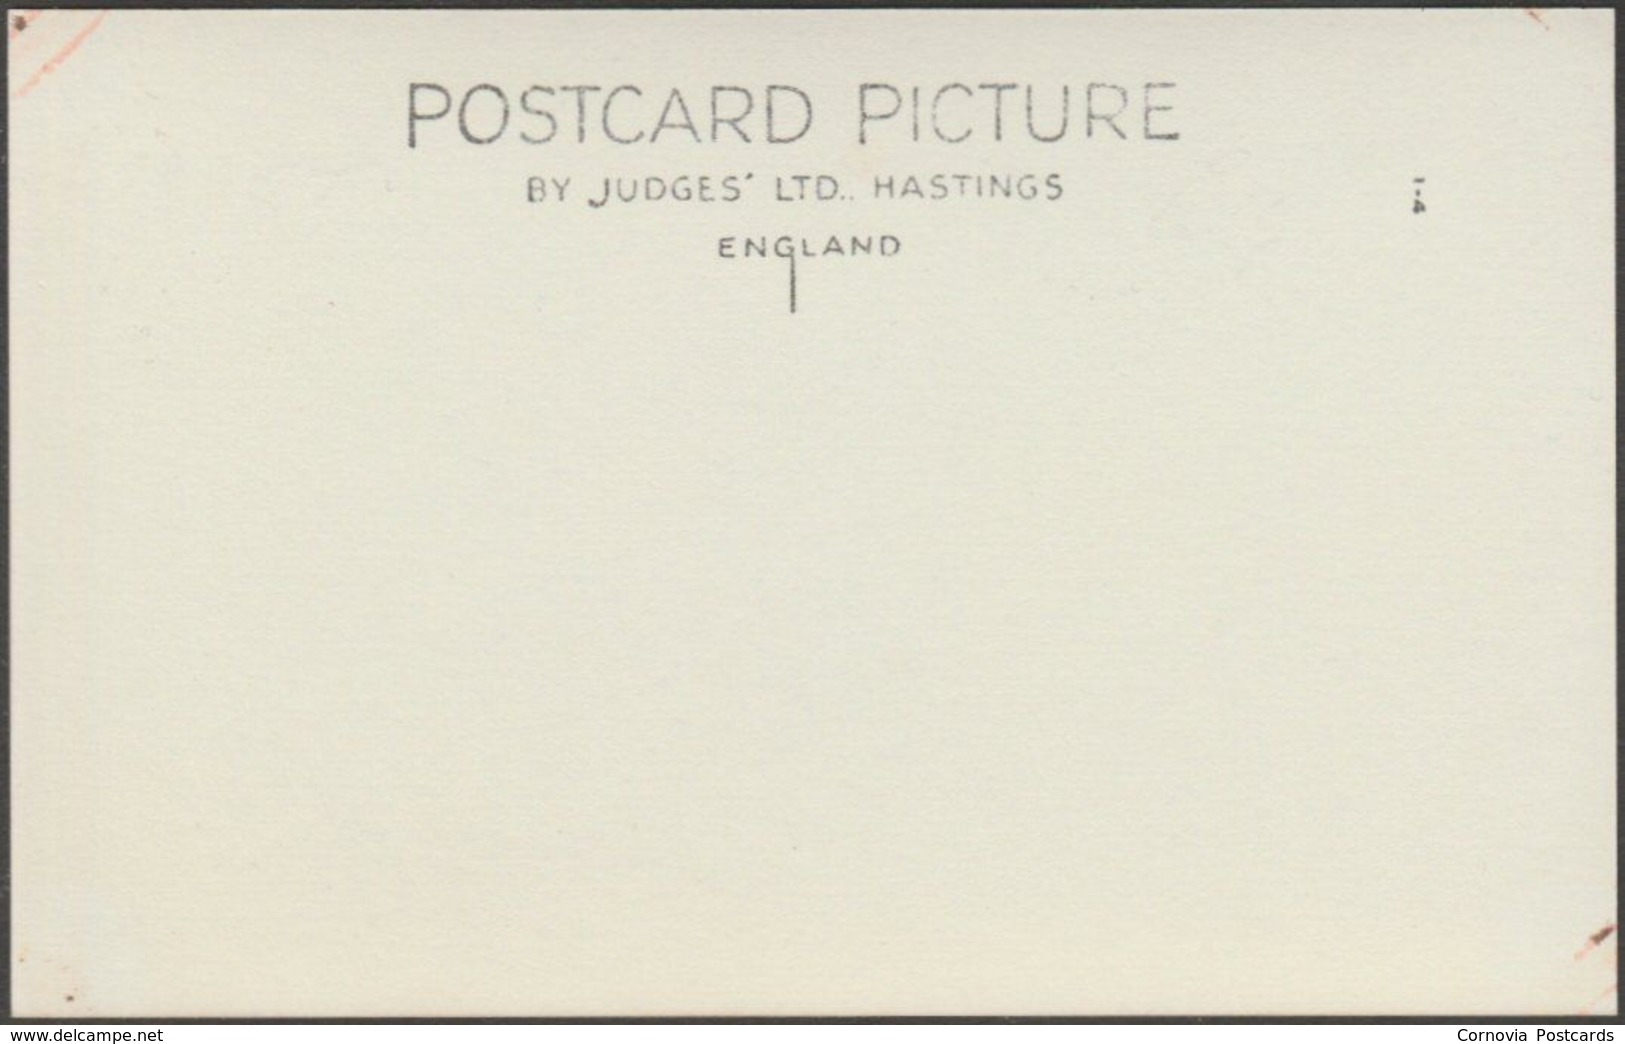 Old Mill Pond, Swanage, Dorset, 1932 - Judges RP Postcard - Swanage